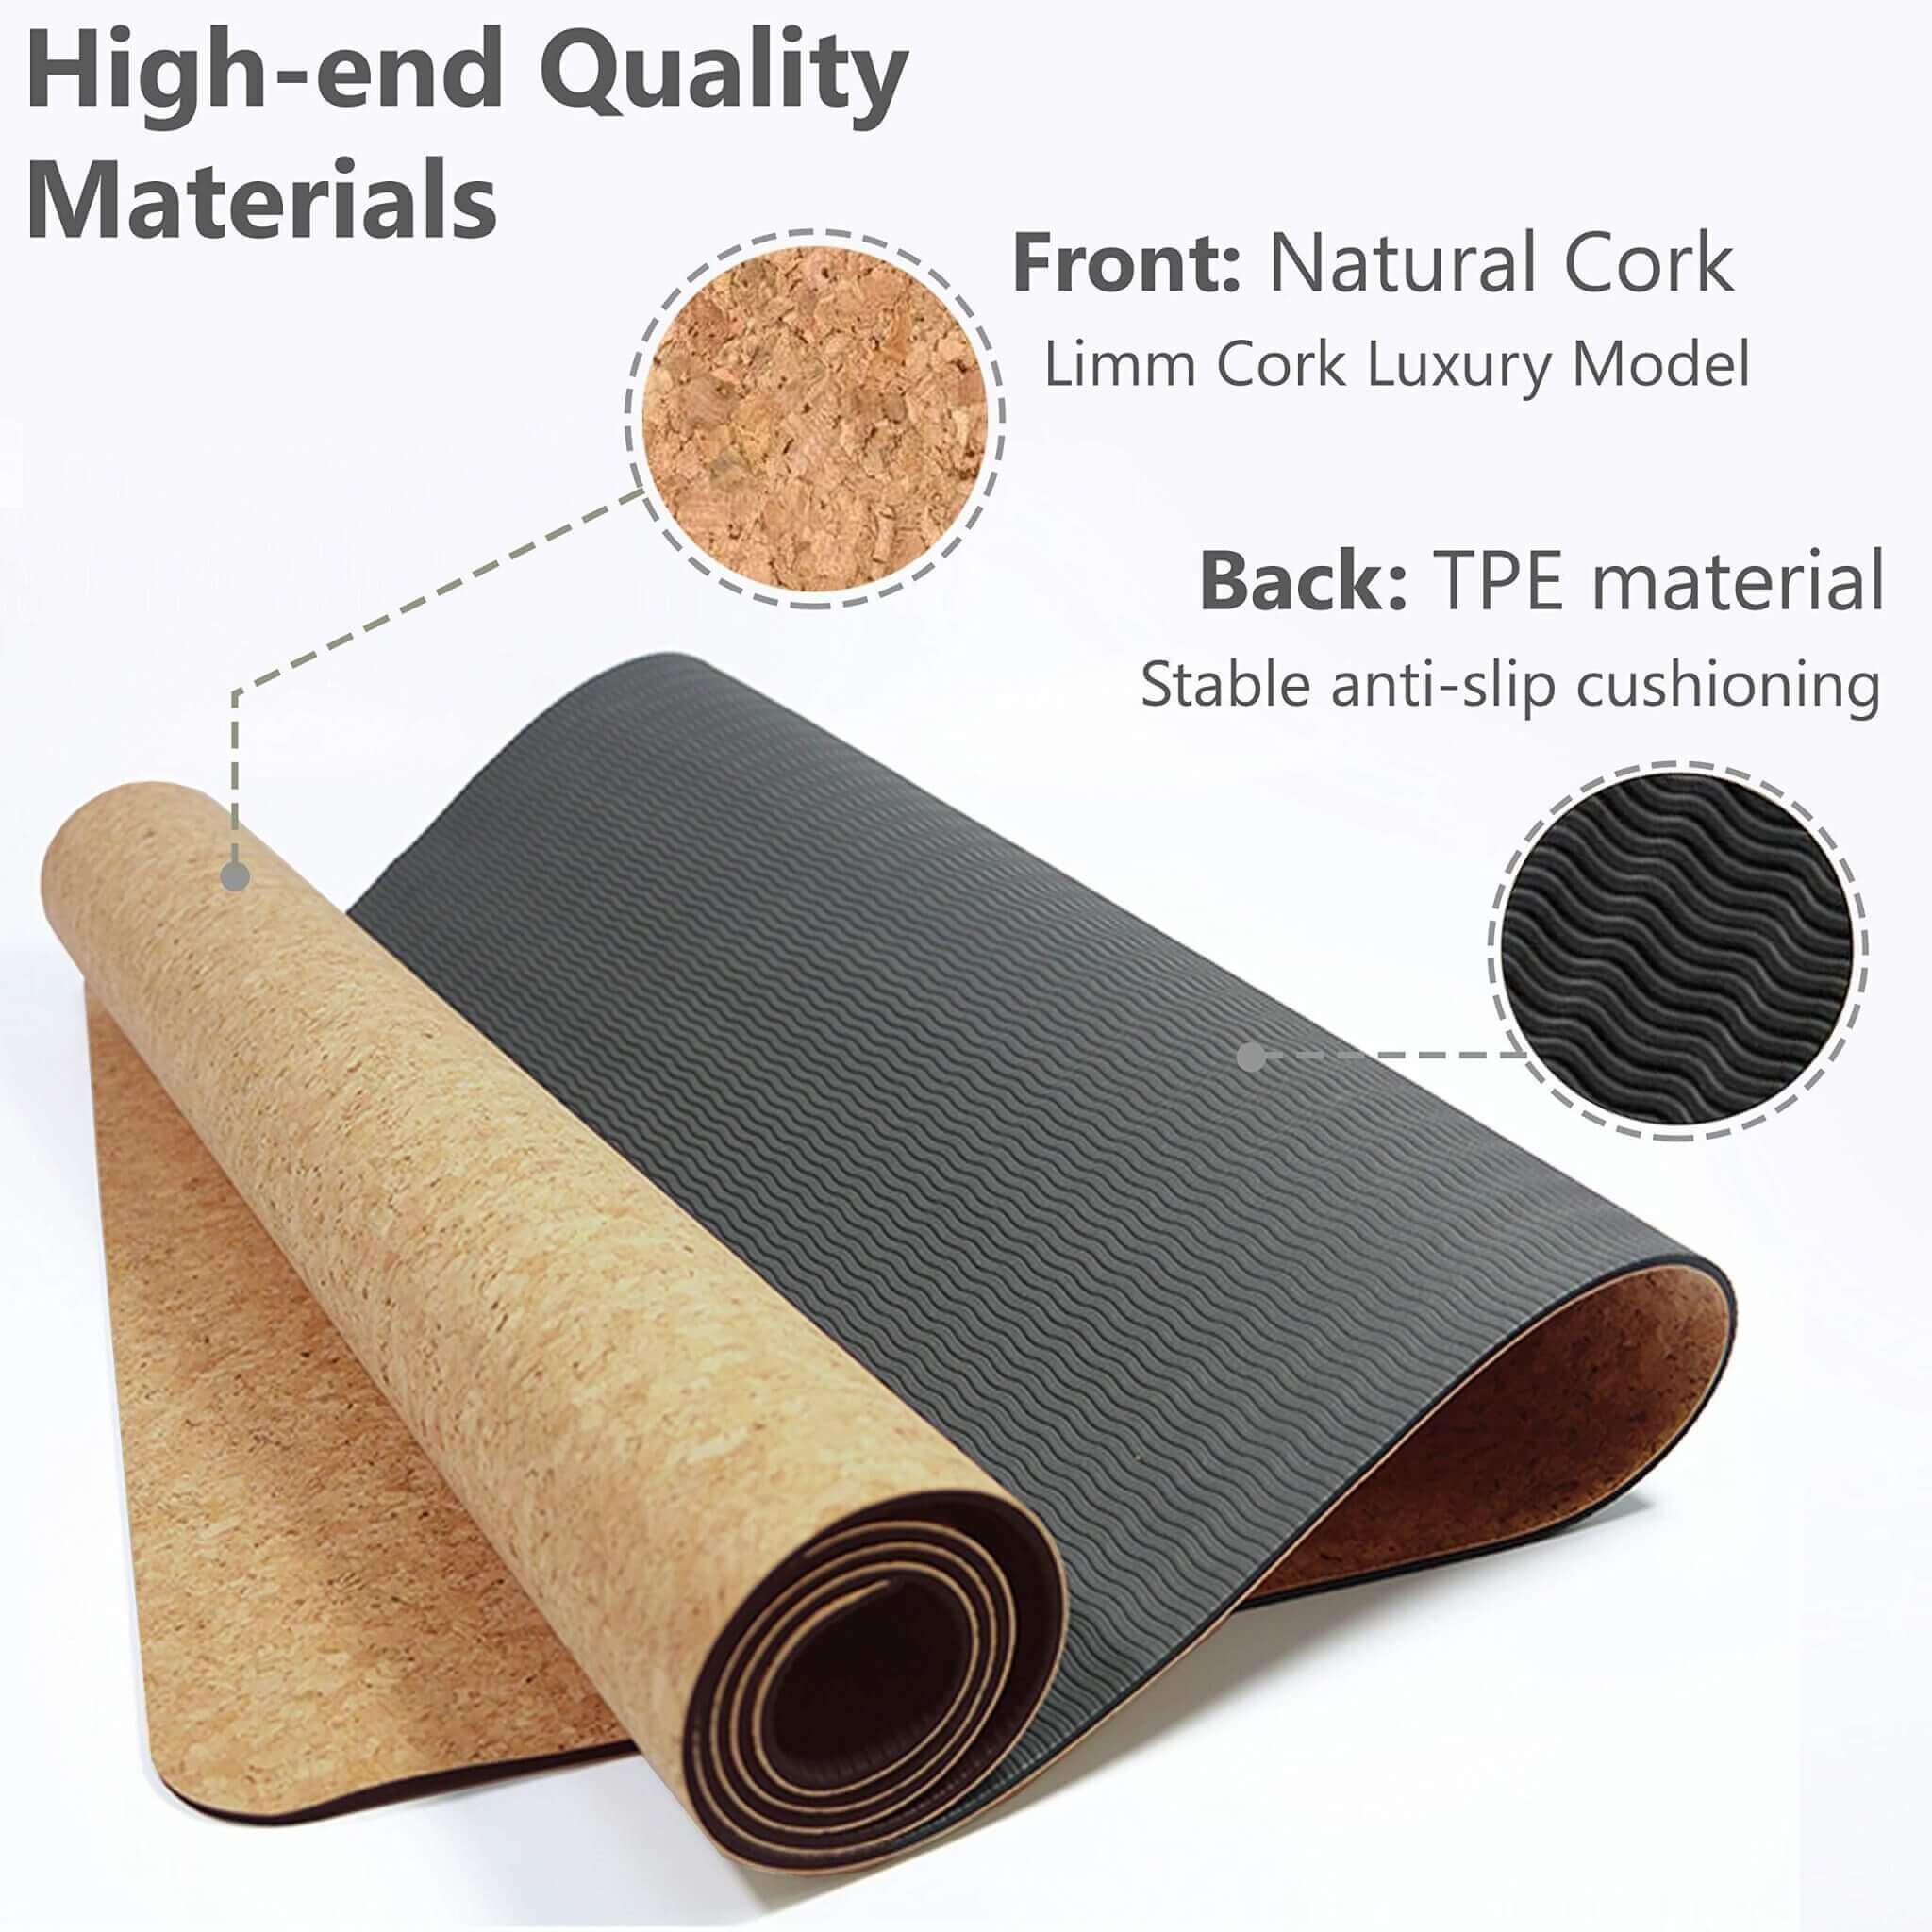 Why You Should Choose a Natural Cork Yoga Mat